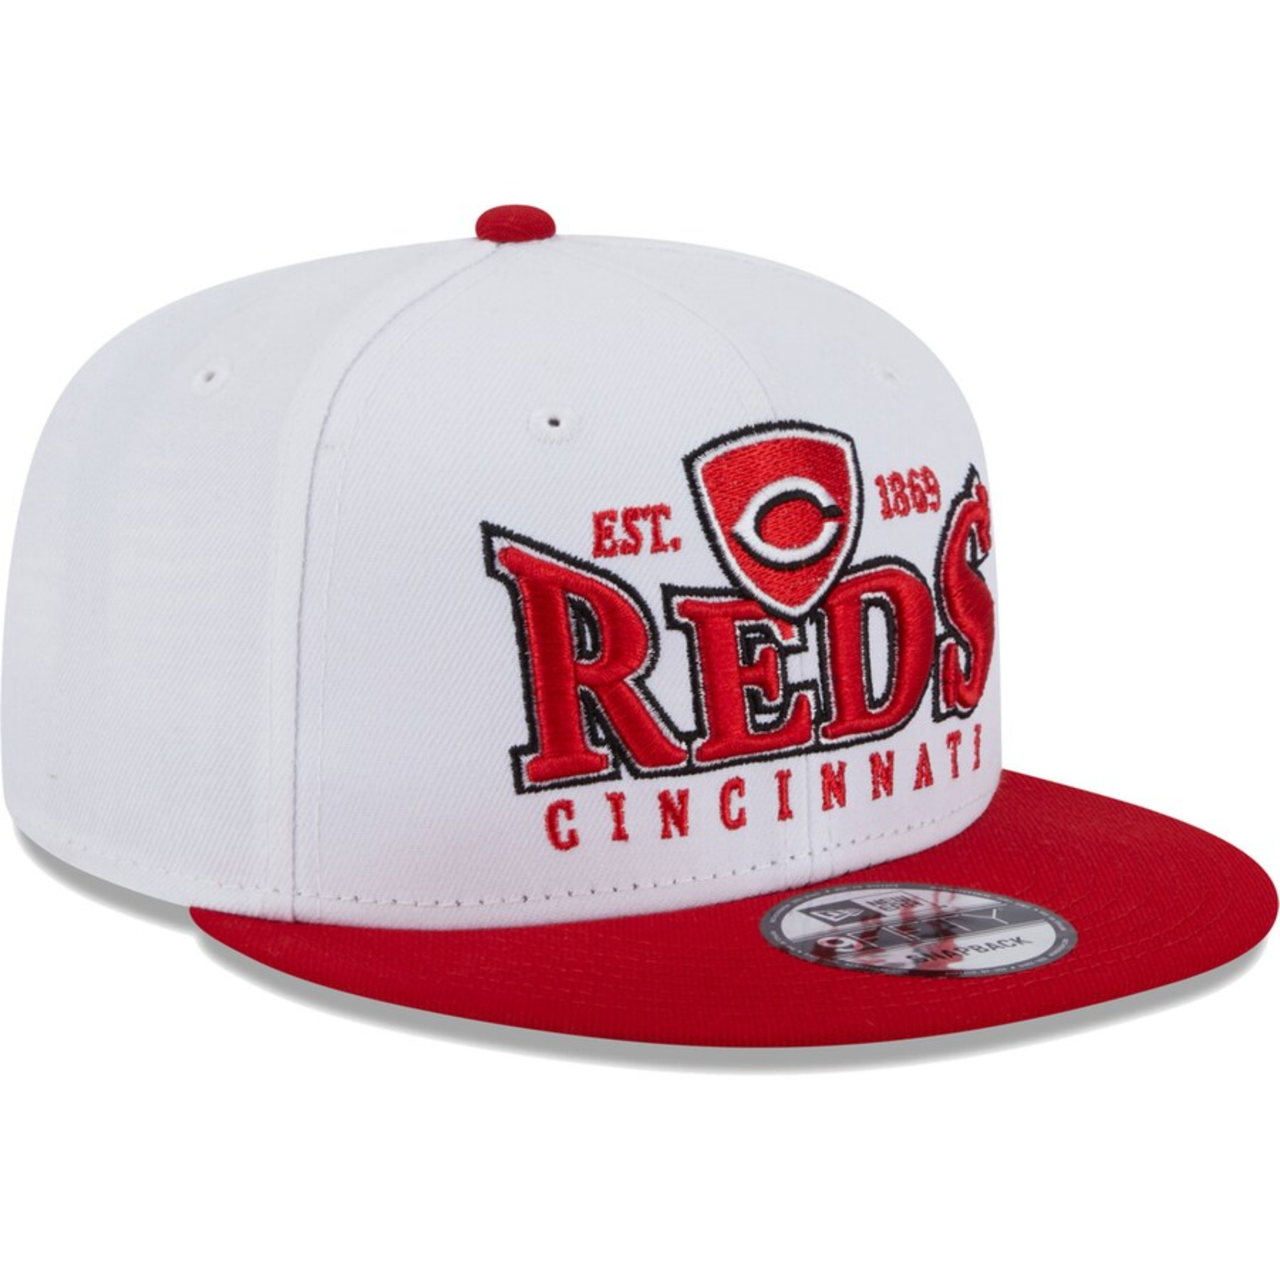 Men's New Era Stone/Red Cincinnati Reds Retro 59FIFTY Fitted Hat